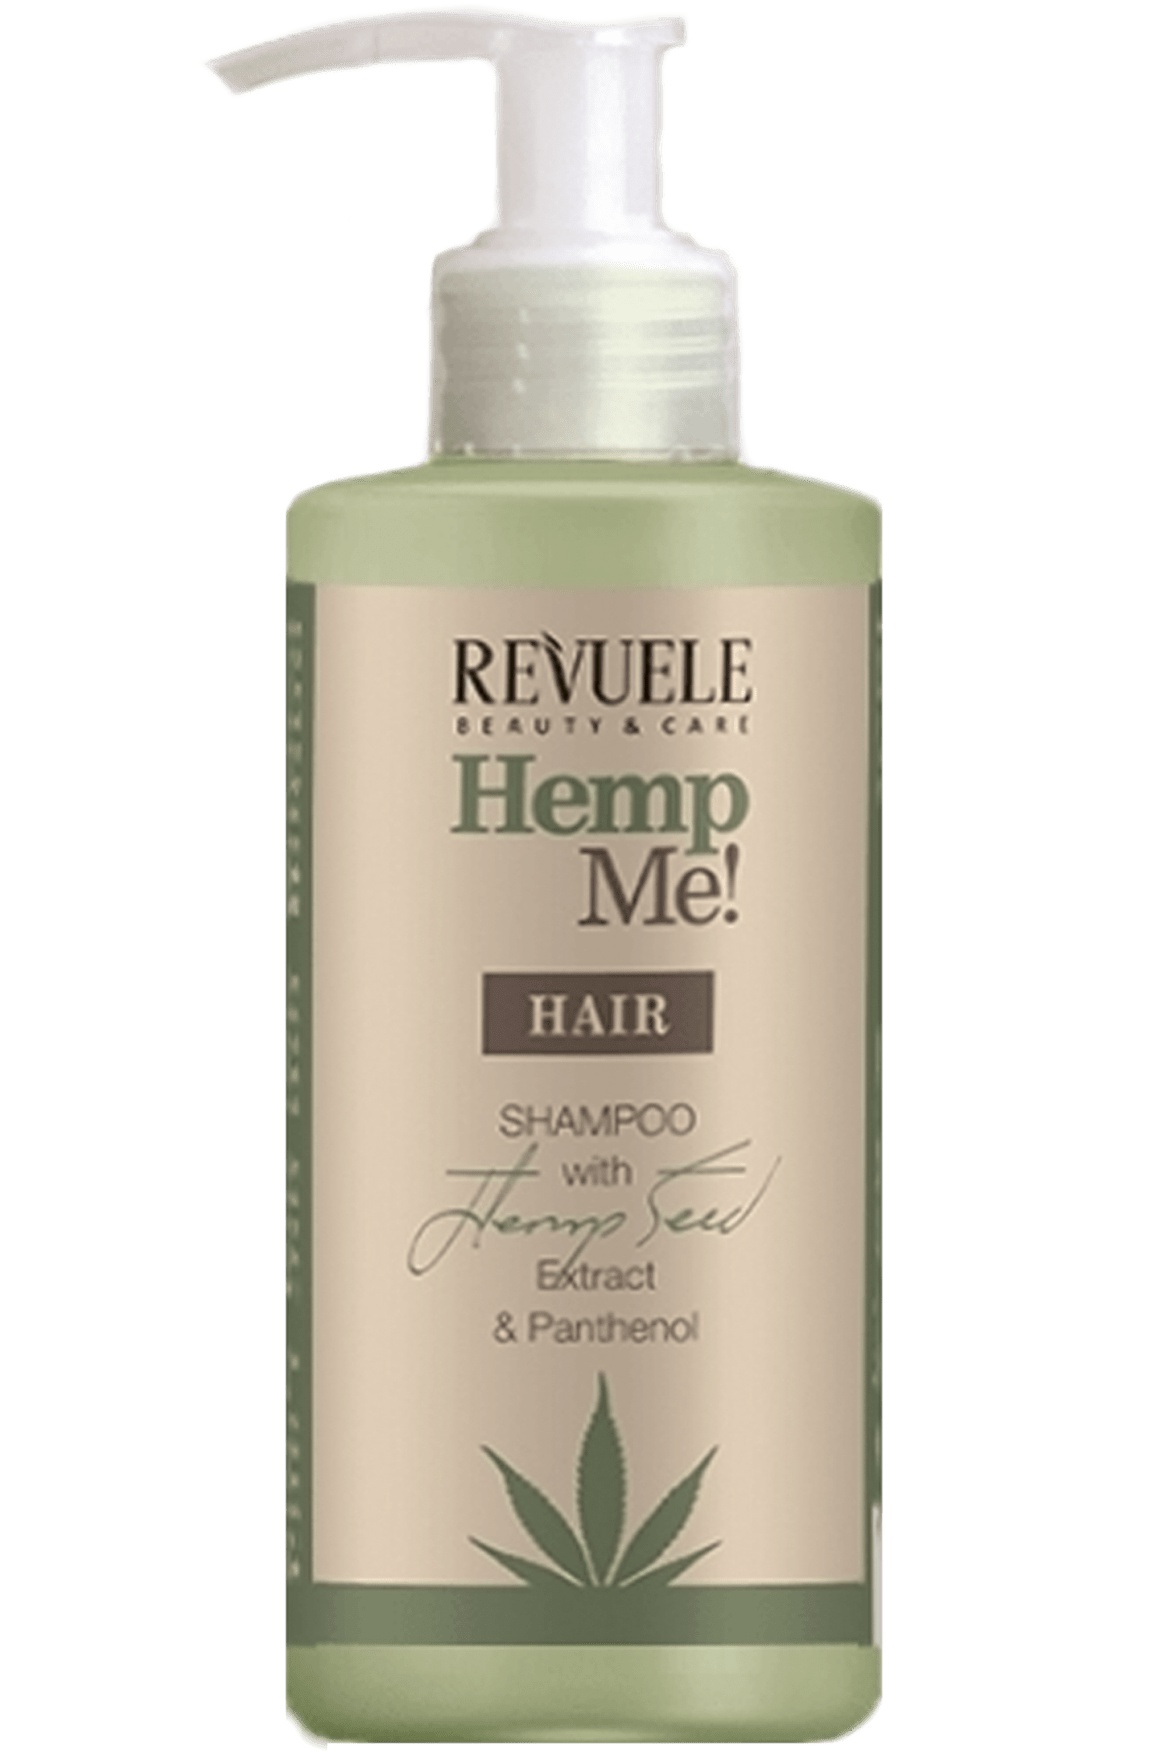 Revuele Hemp Me! Hair Shampoo